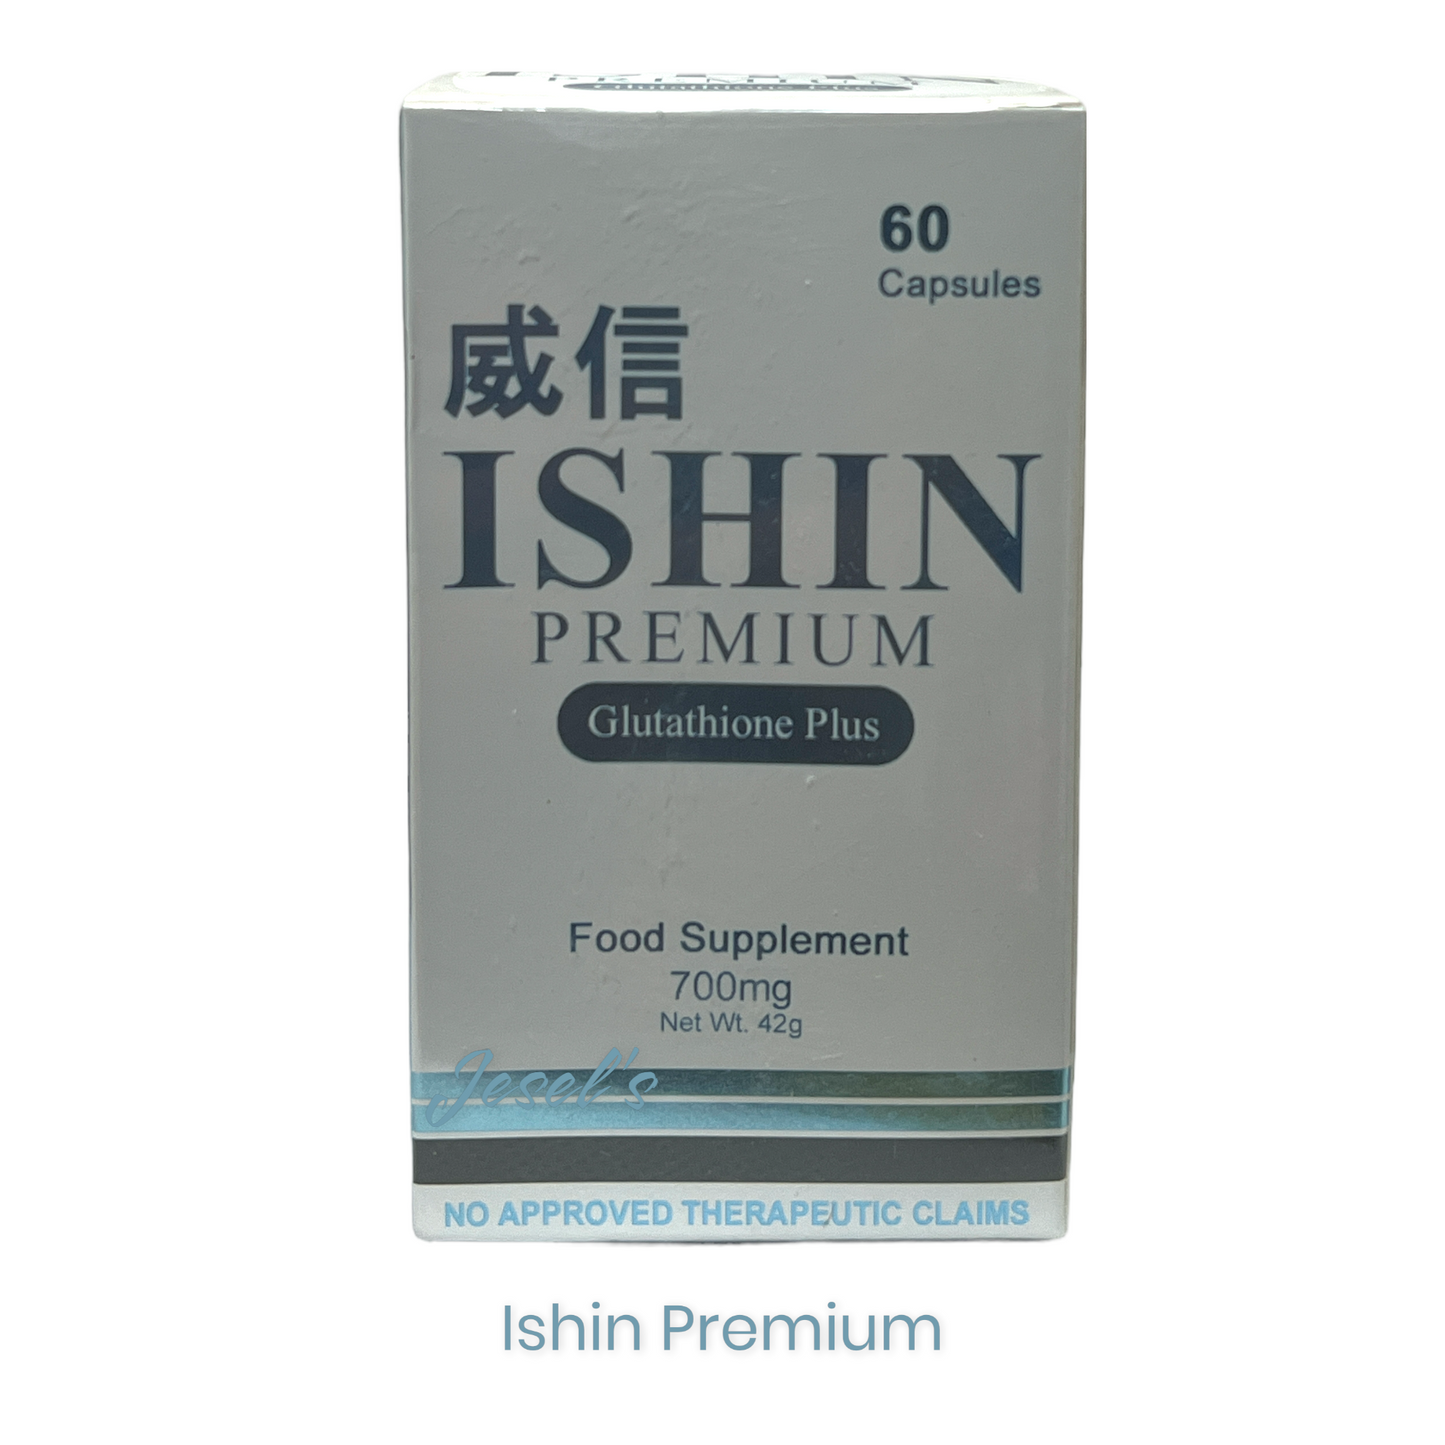 Ishin Premium